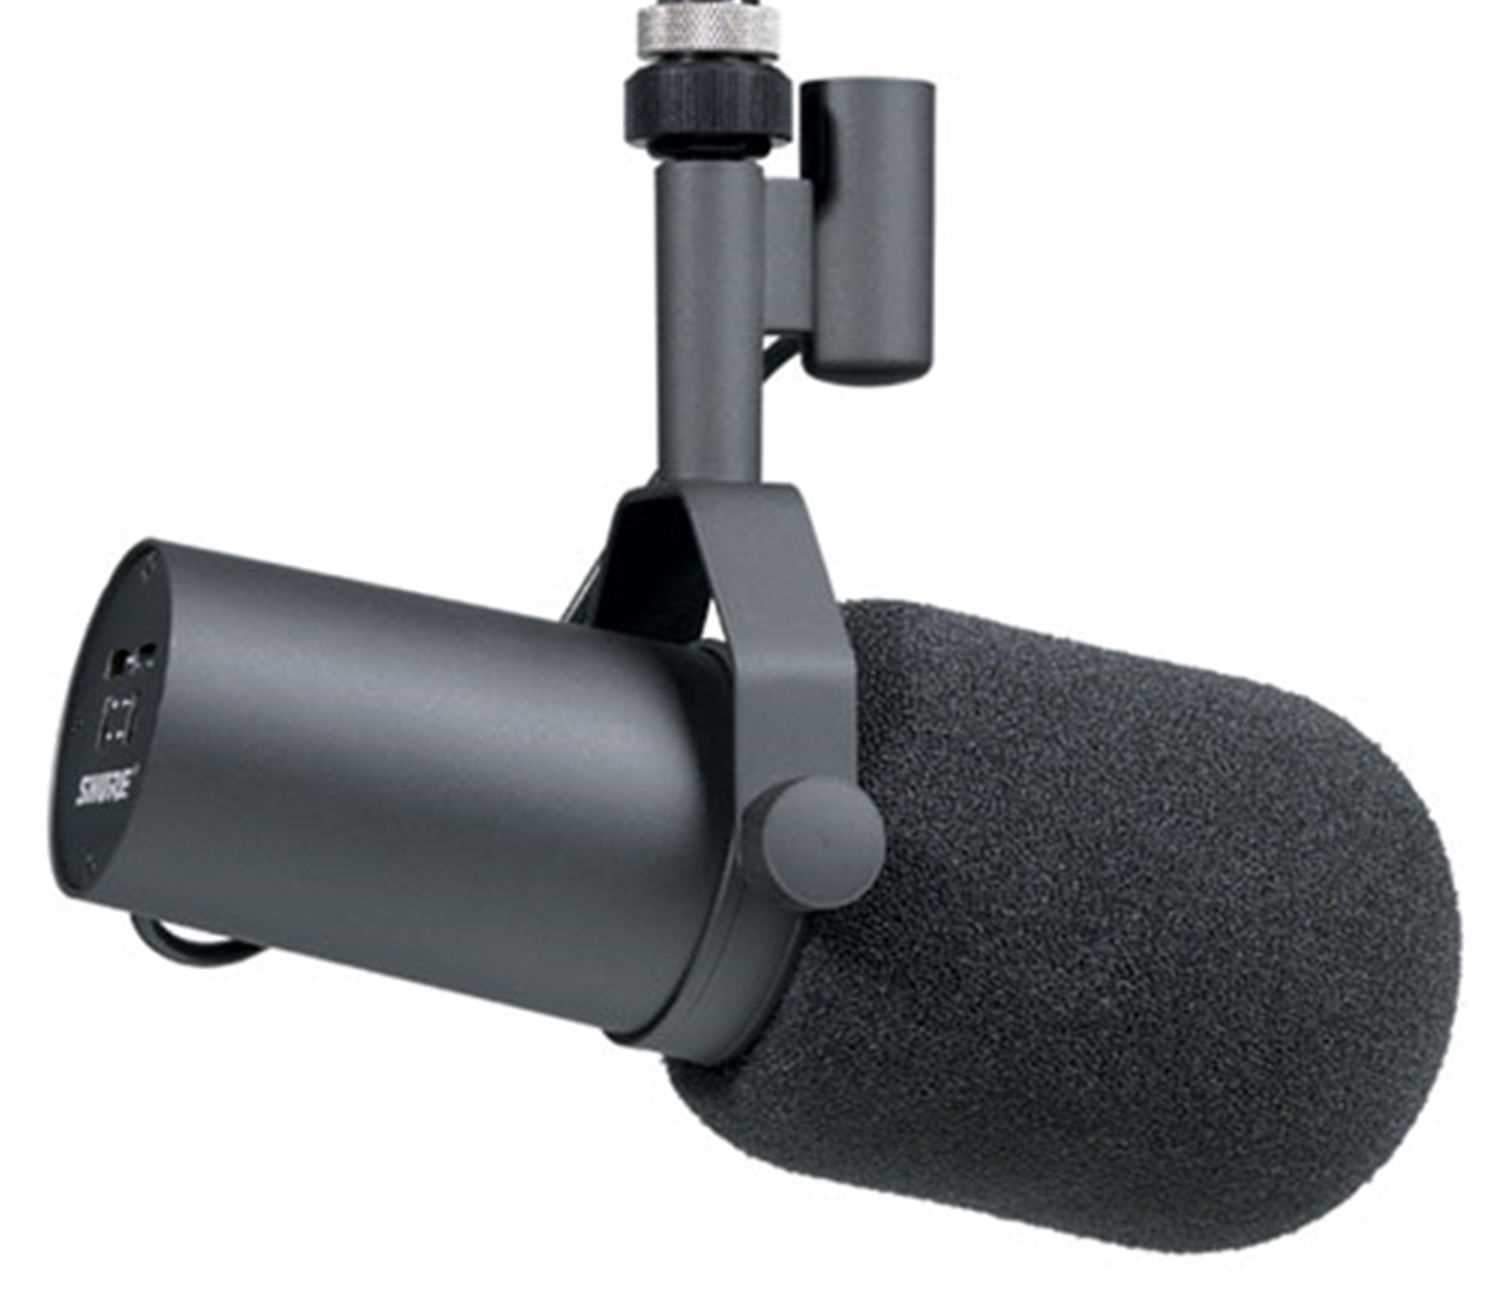 Shure SM7B Cardioid Dynamic Microphone - Black